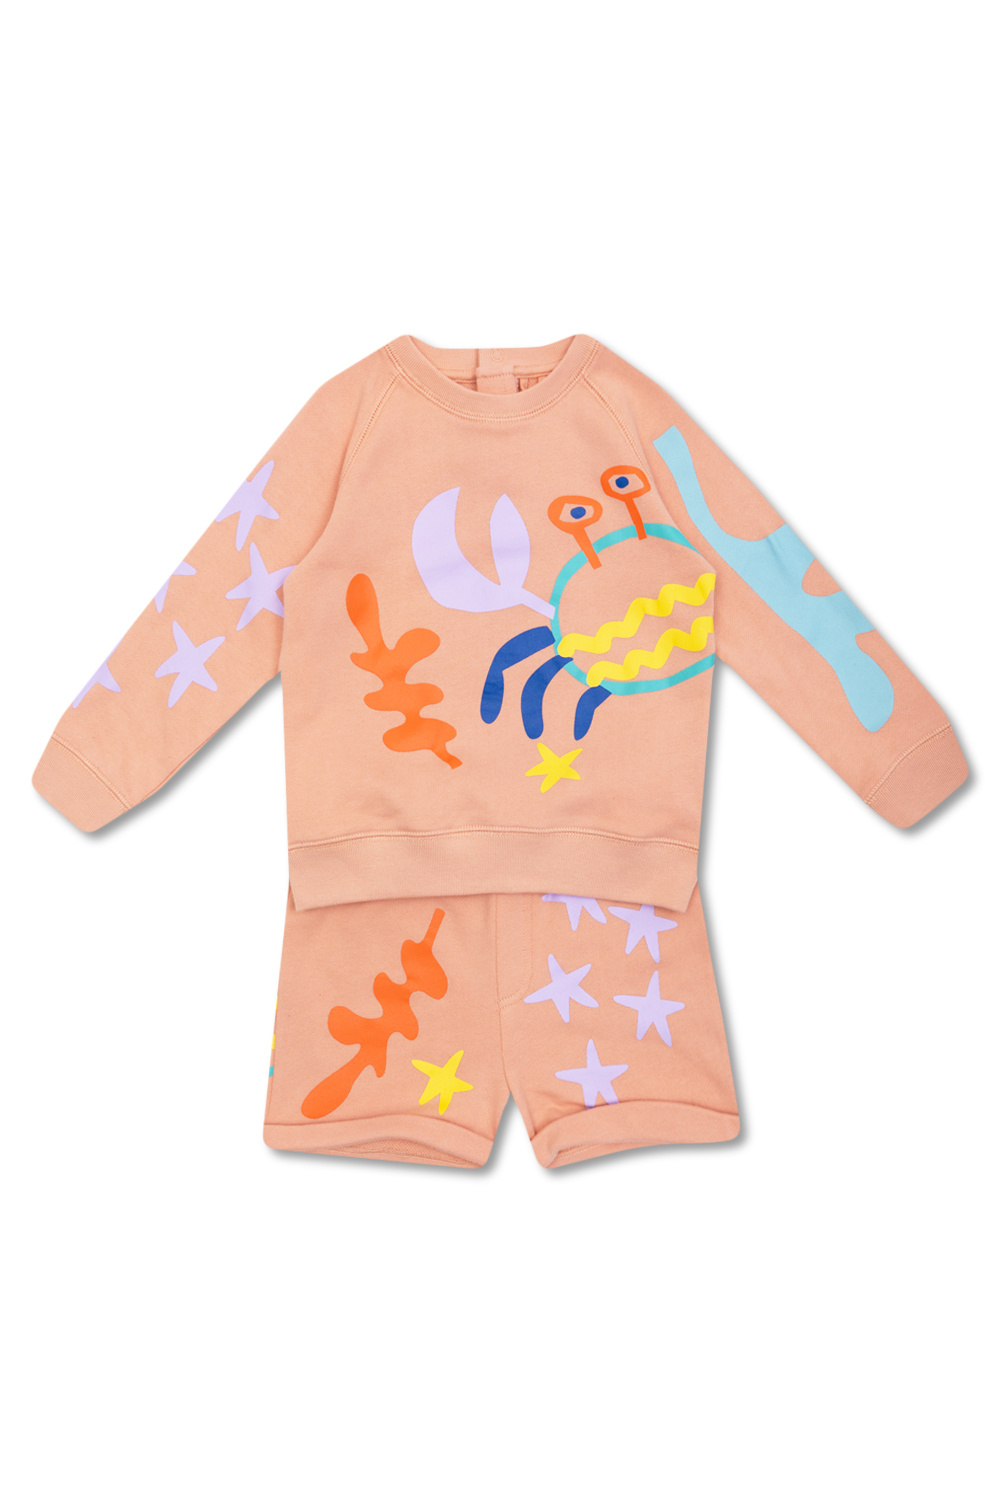 stella hat McCartney Kids Sweatshirt & shorts set